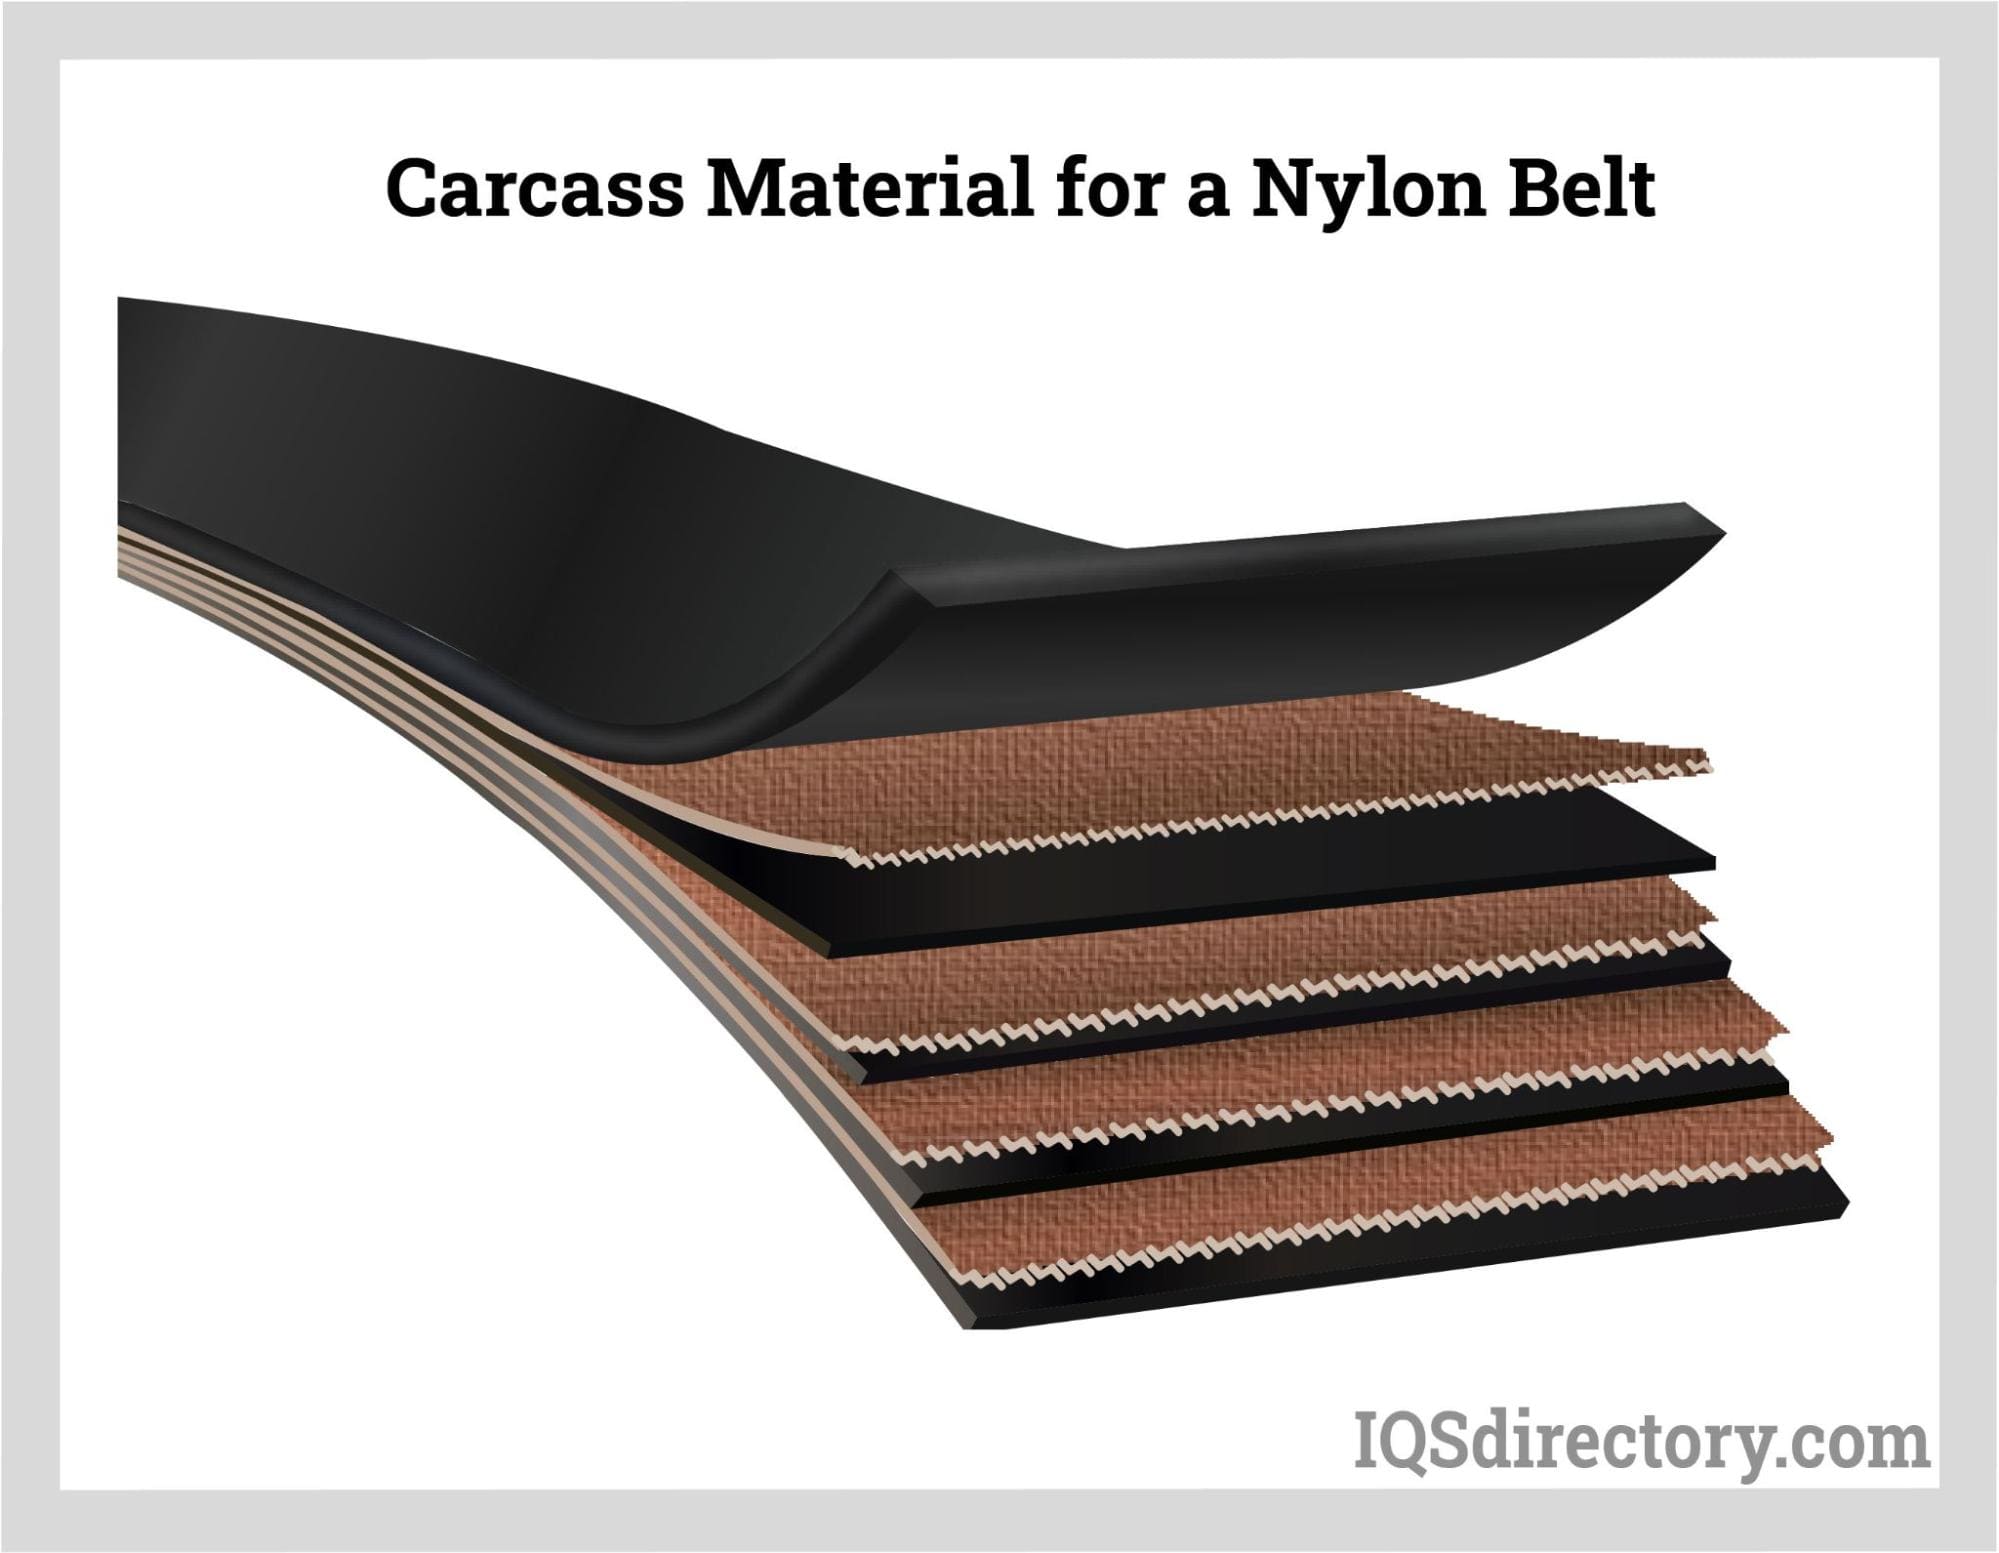 Carcass Material for a Nylon Belt